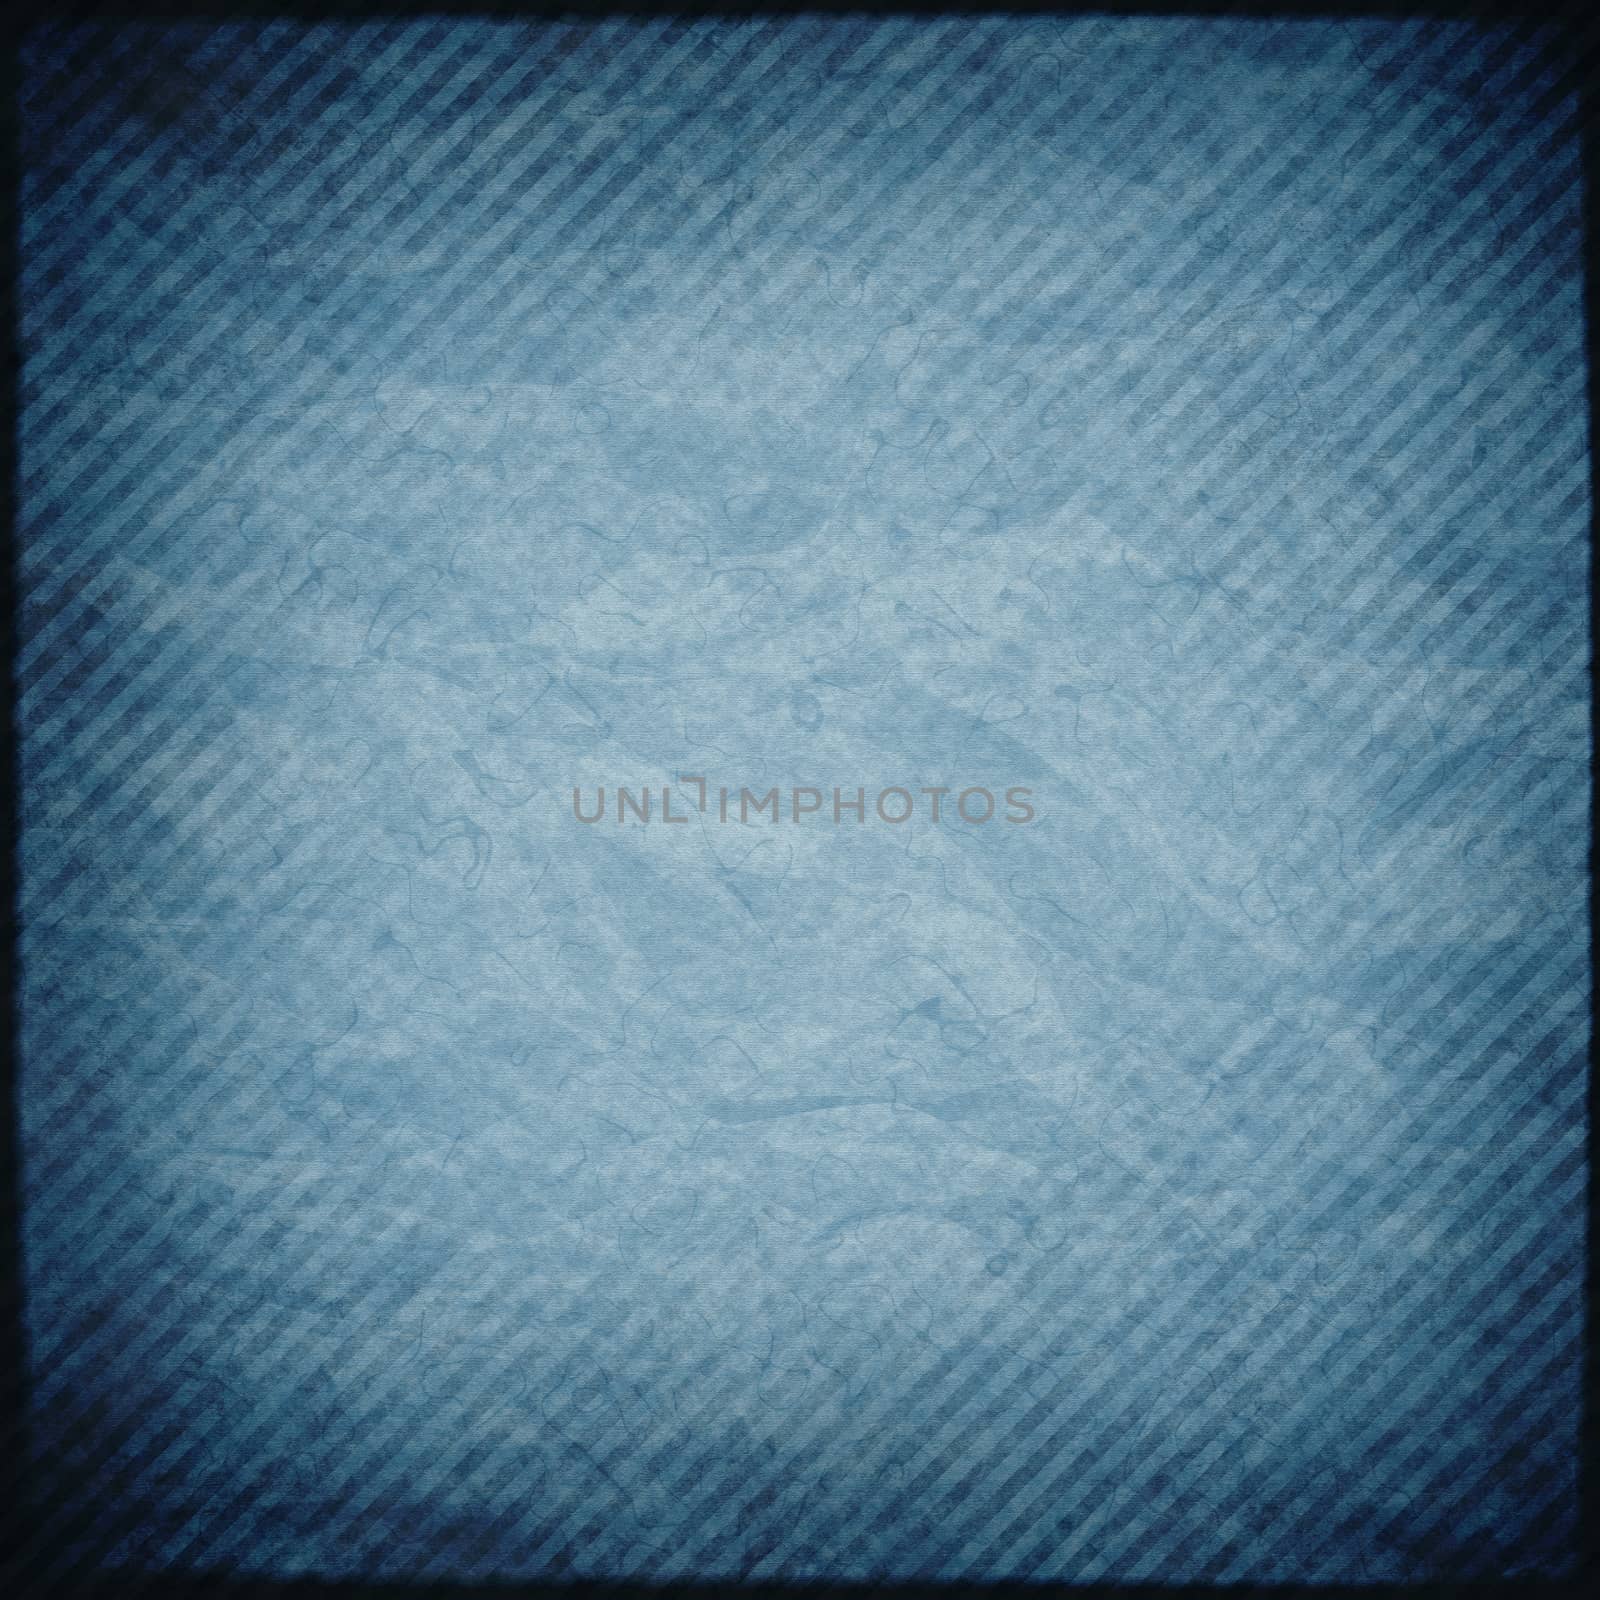 Blue grunge striped background or texture